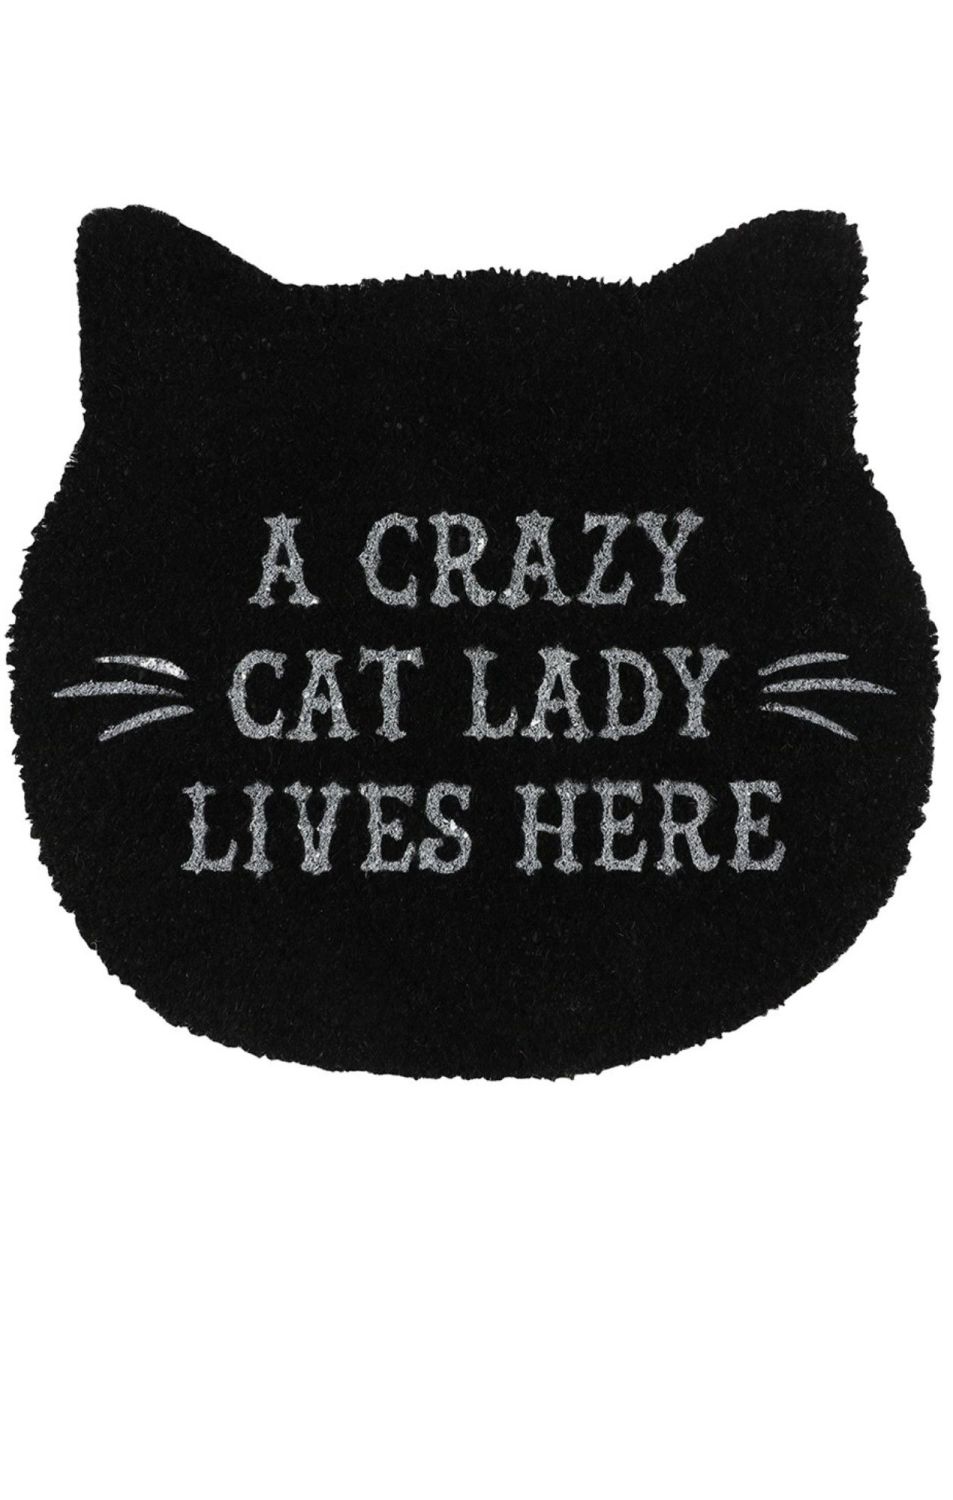 Cat lady doormat RRP £19.99